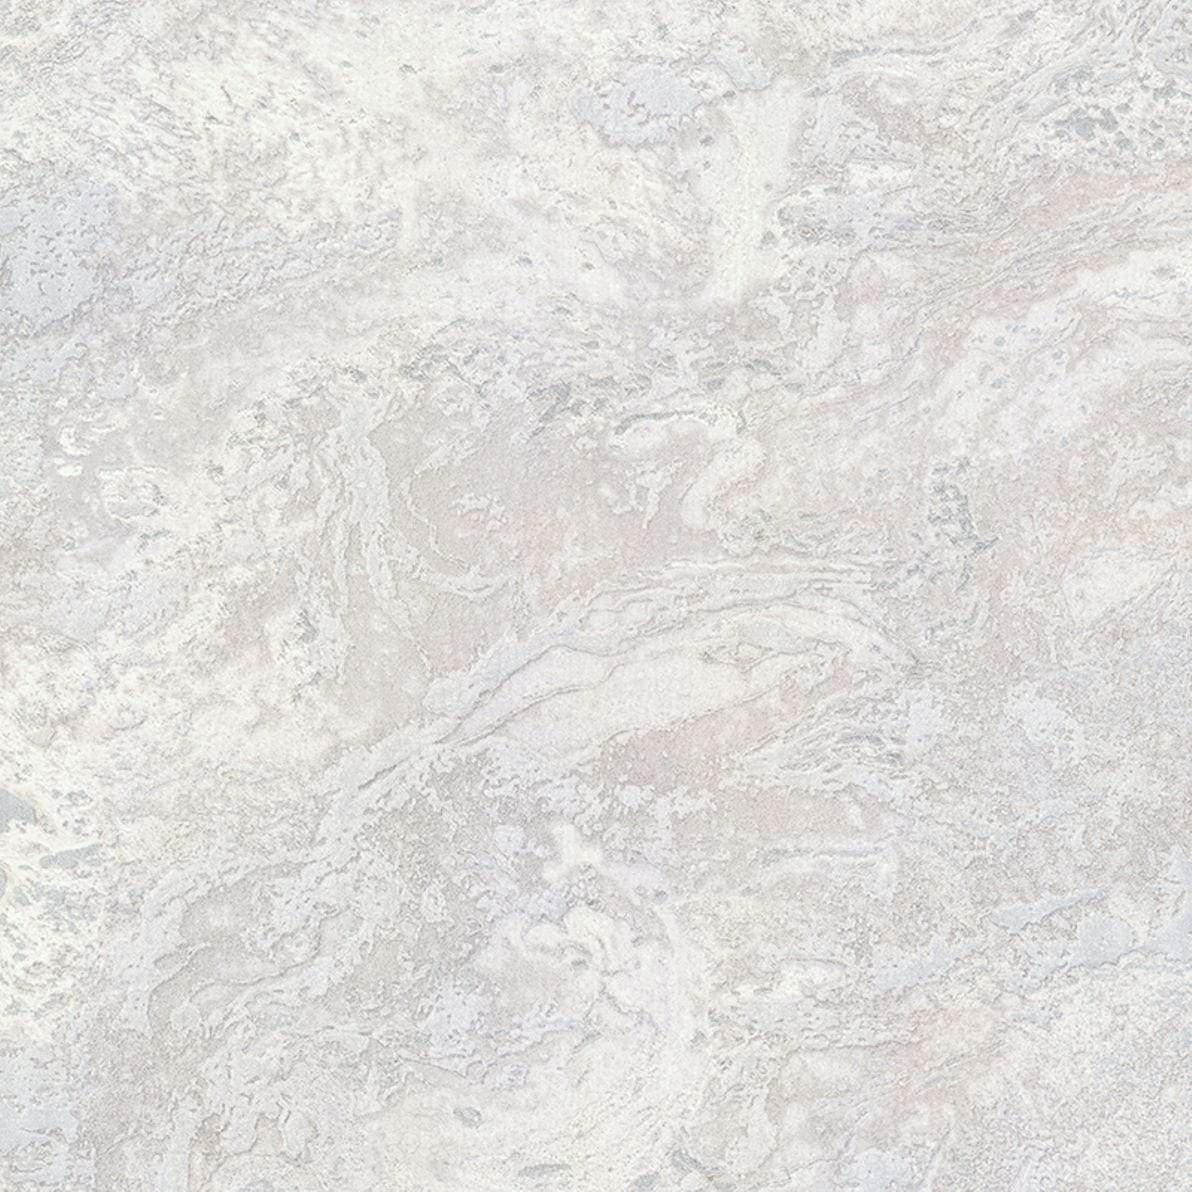 Wallpaper  -  Colemans Carrara Light Grey Wallpaper - 83666  -  60001027